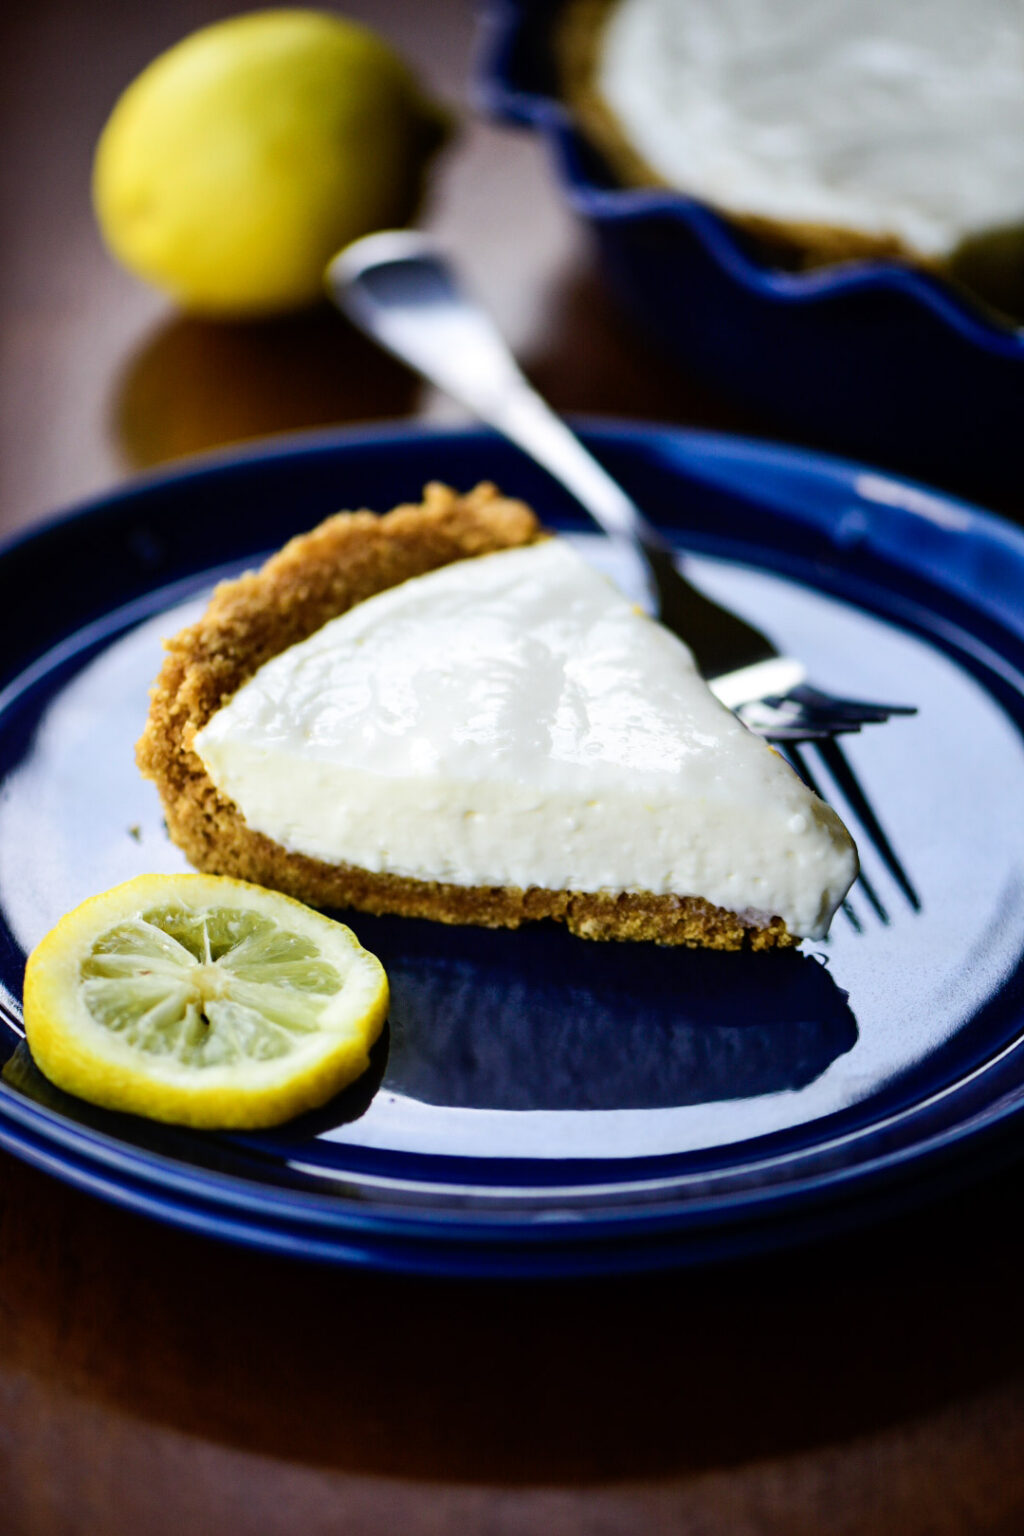 A single slice of lemon pie